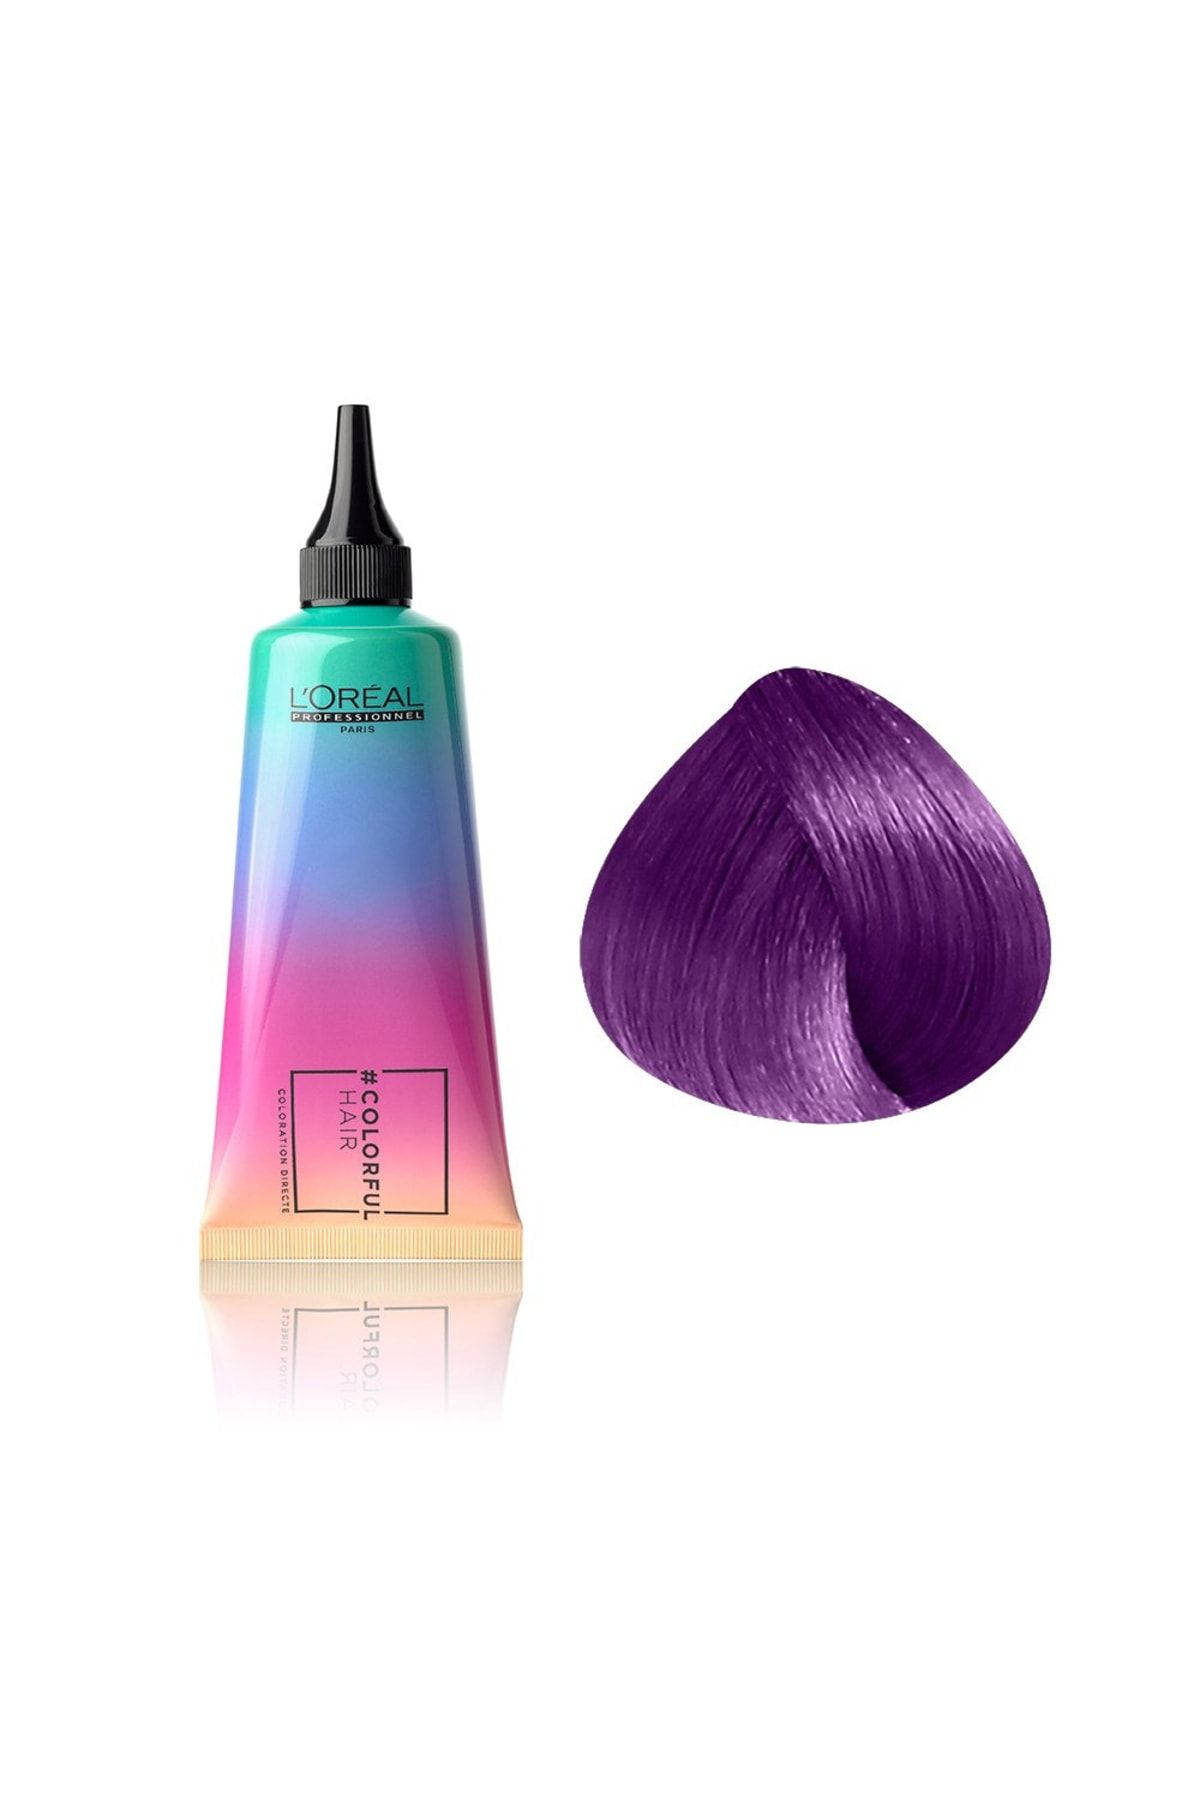 L'oreal Professionnel Colorful Hair Electric Purple Purple Bright Dazzling Hair Color Cream 90ml